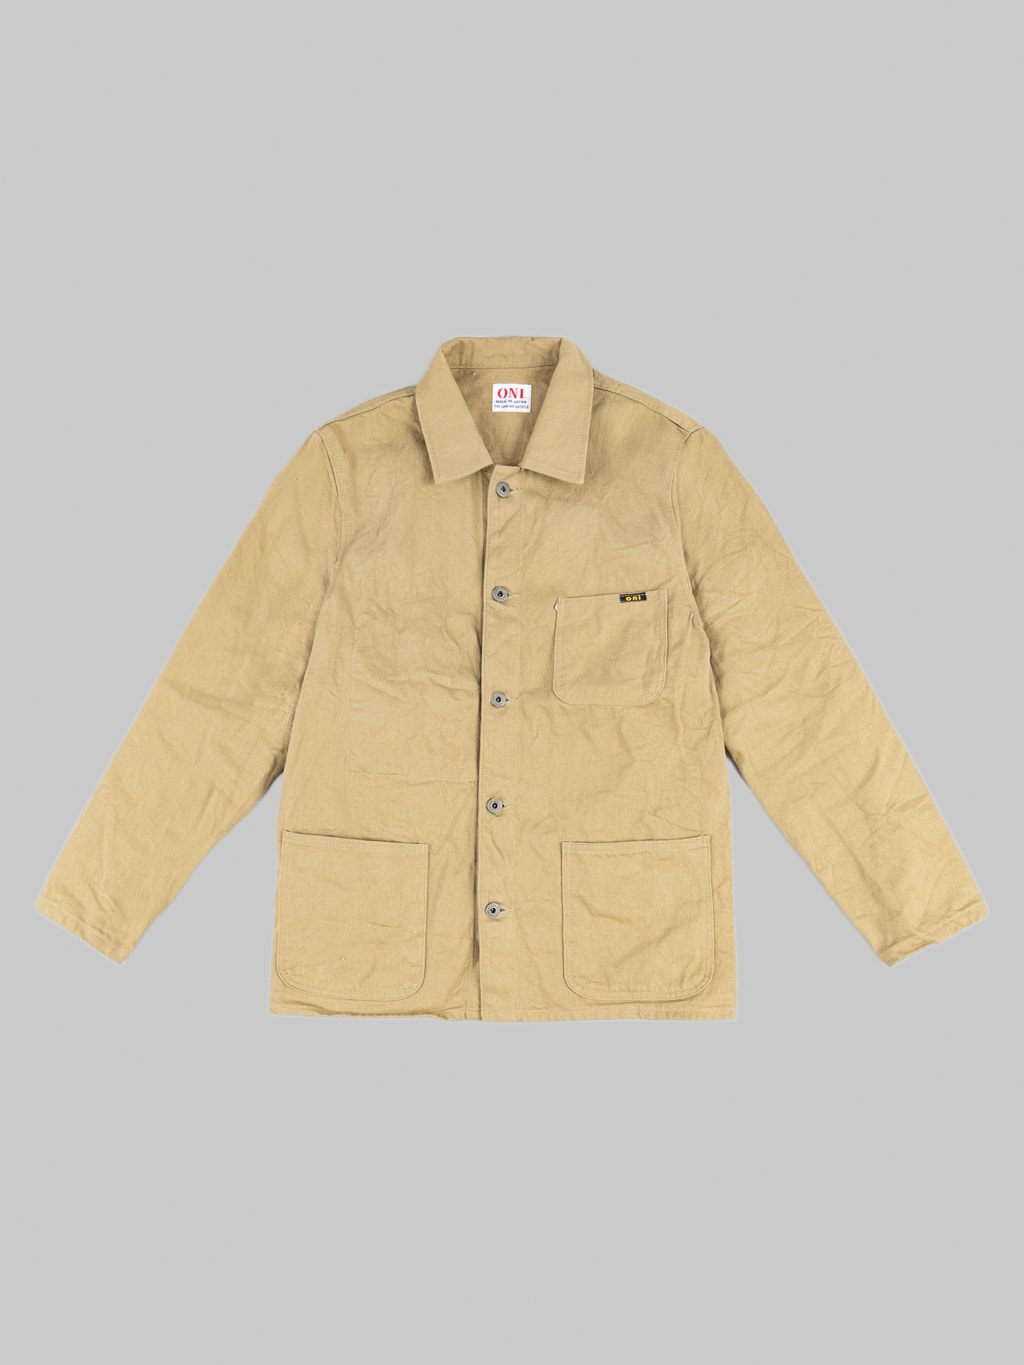 ONI Denim 03501 Sulfur Coverall Jacket Khaki Beige workwear